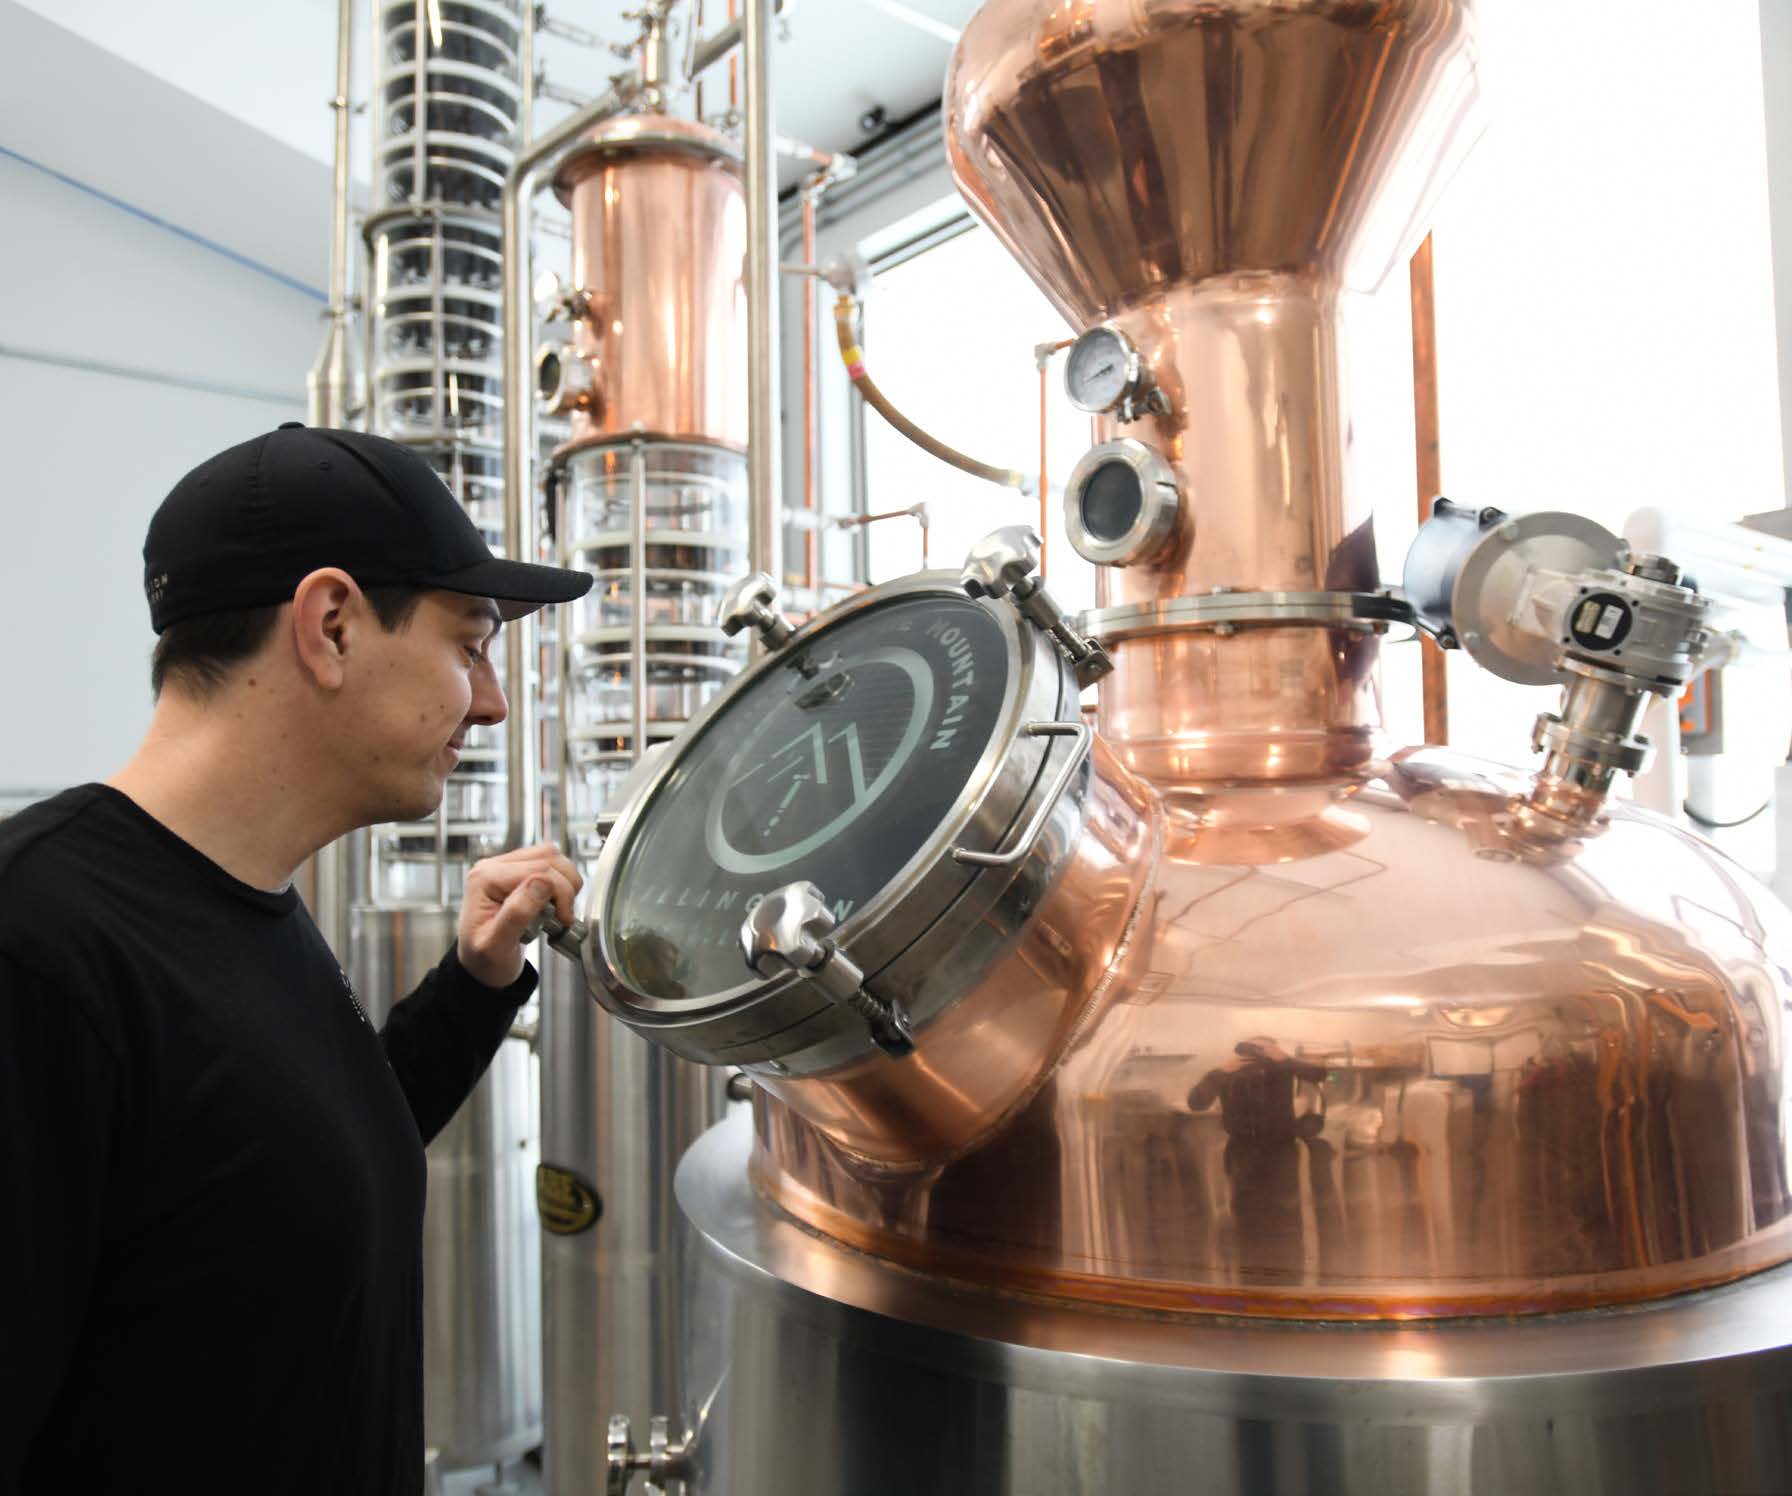 Ryan Bremser, Head Distiller, monitors his work on another special spirit blend at Killington Distillery.